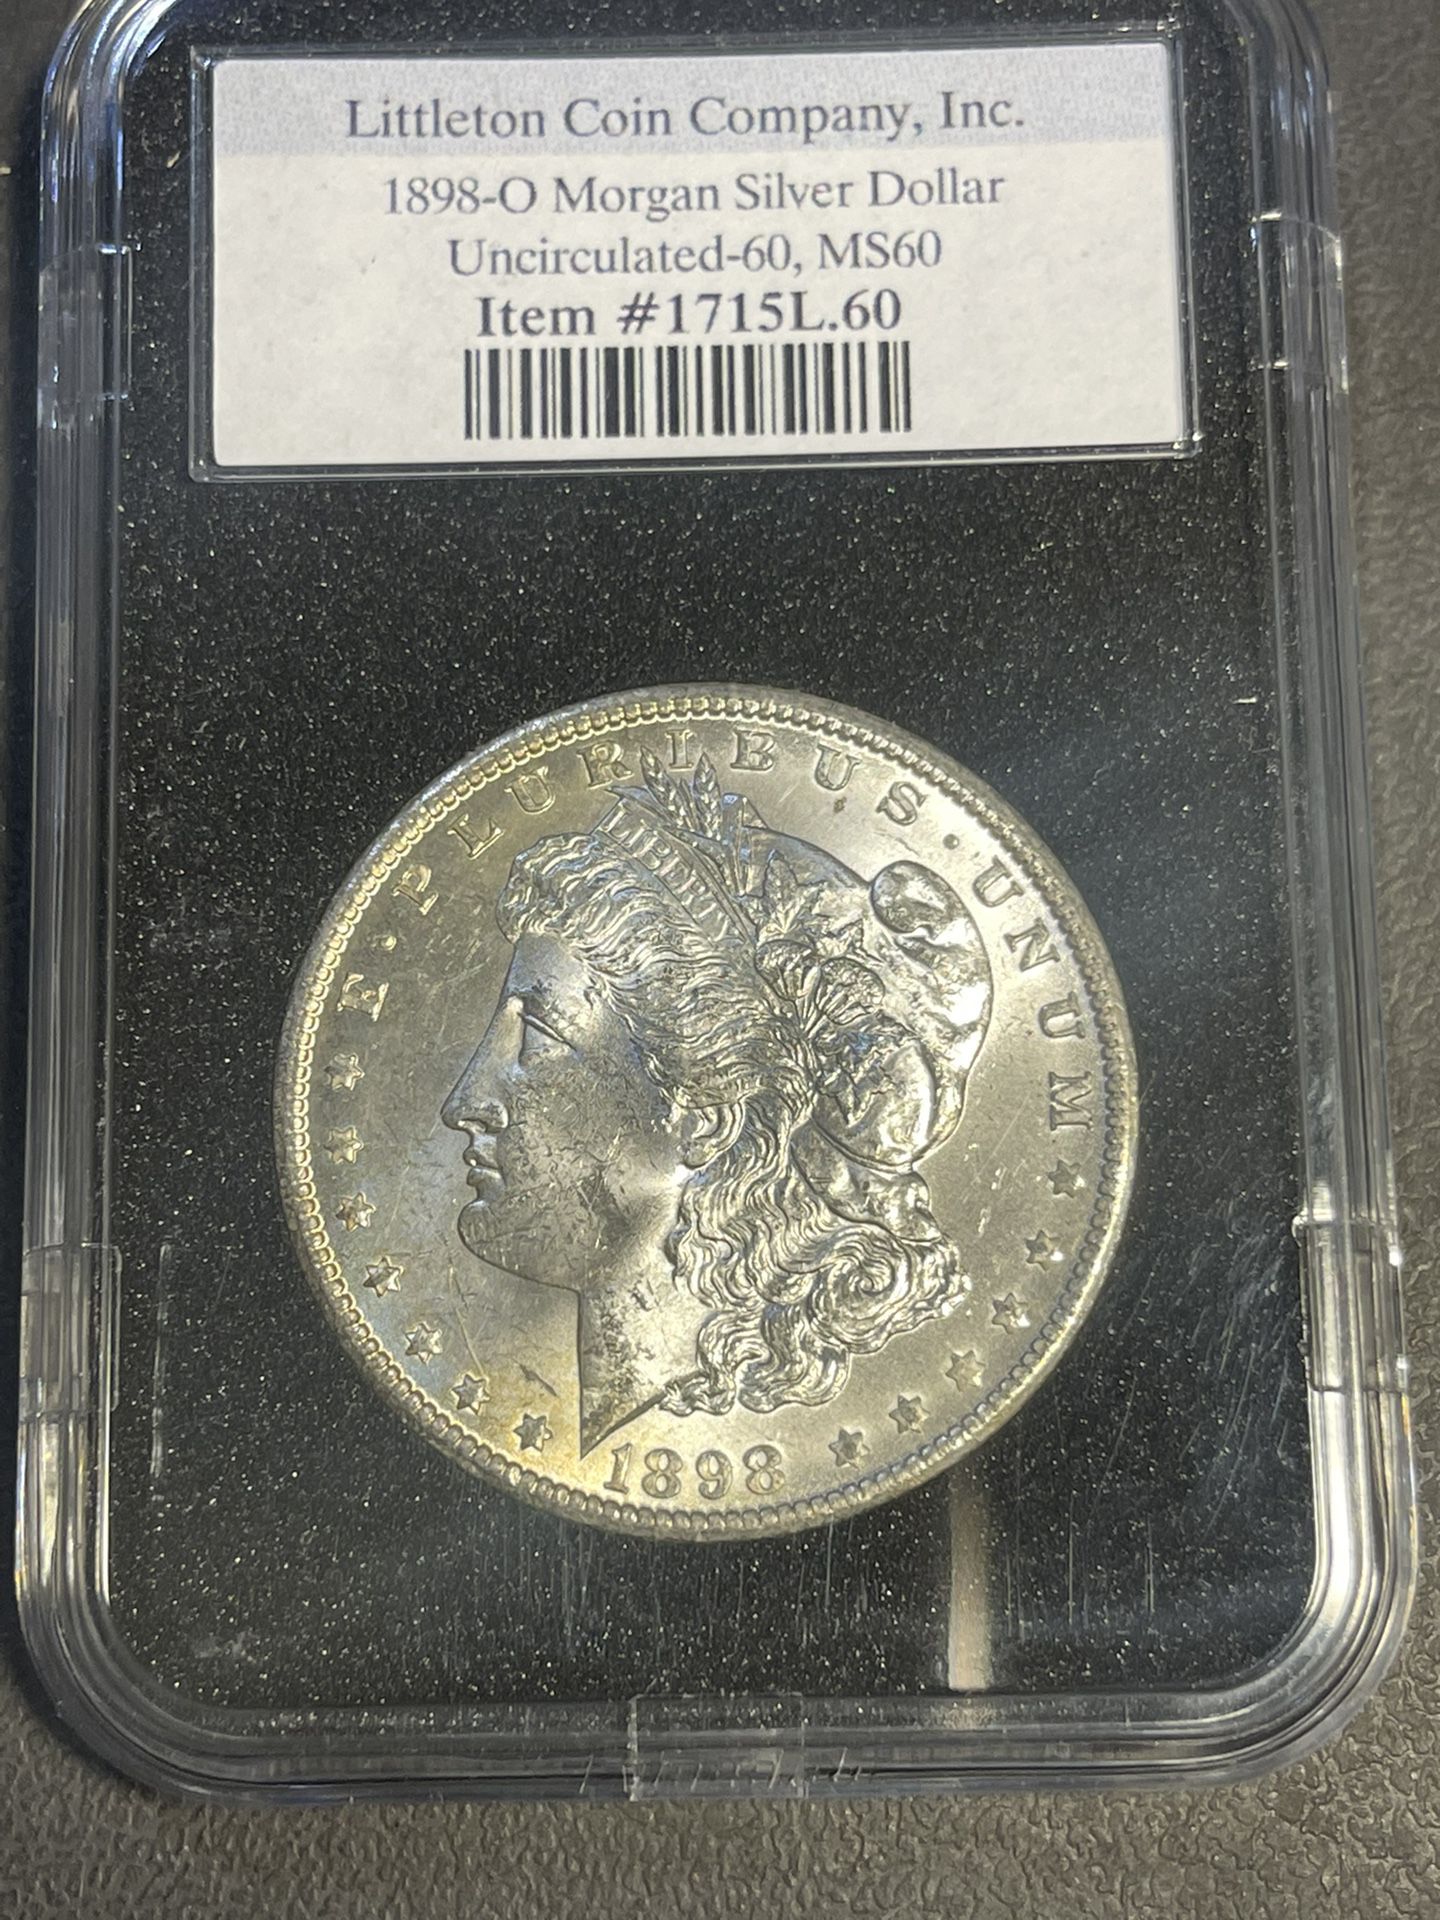 1898-O Morgan Silver Dollar Graded MS 60